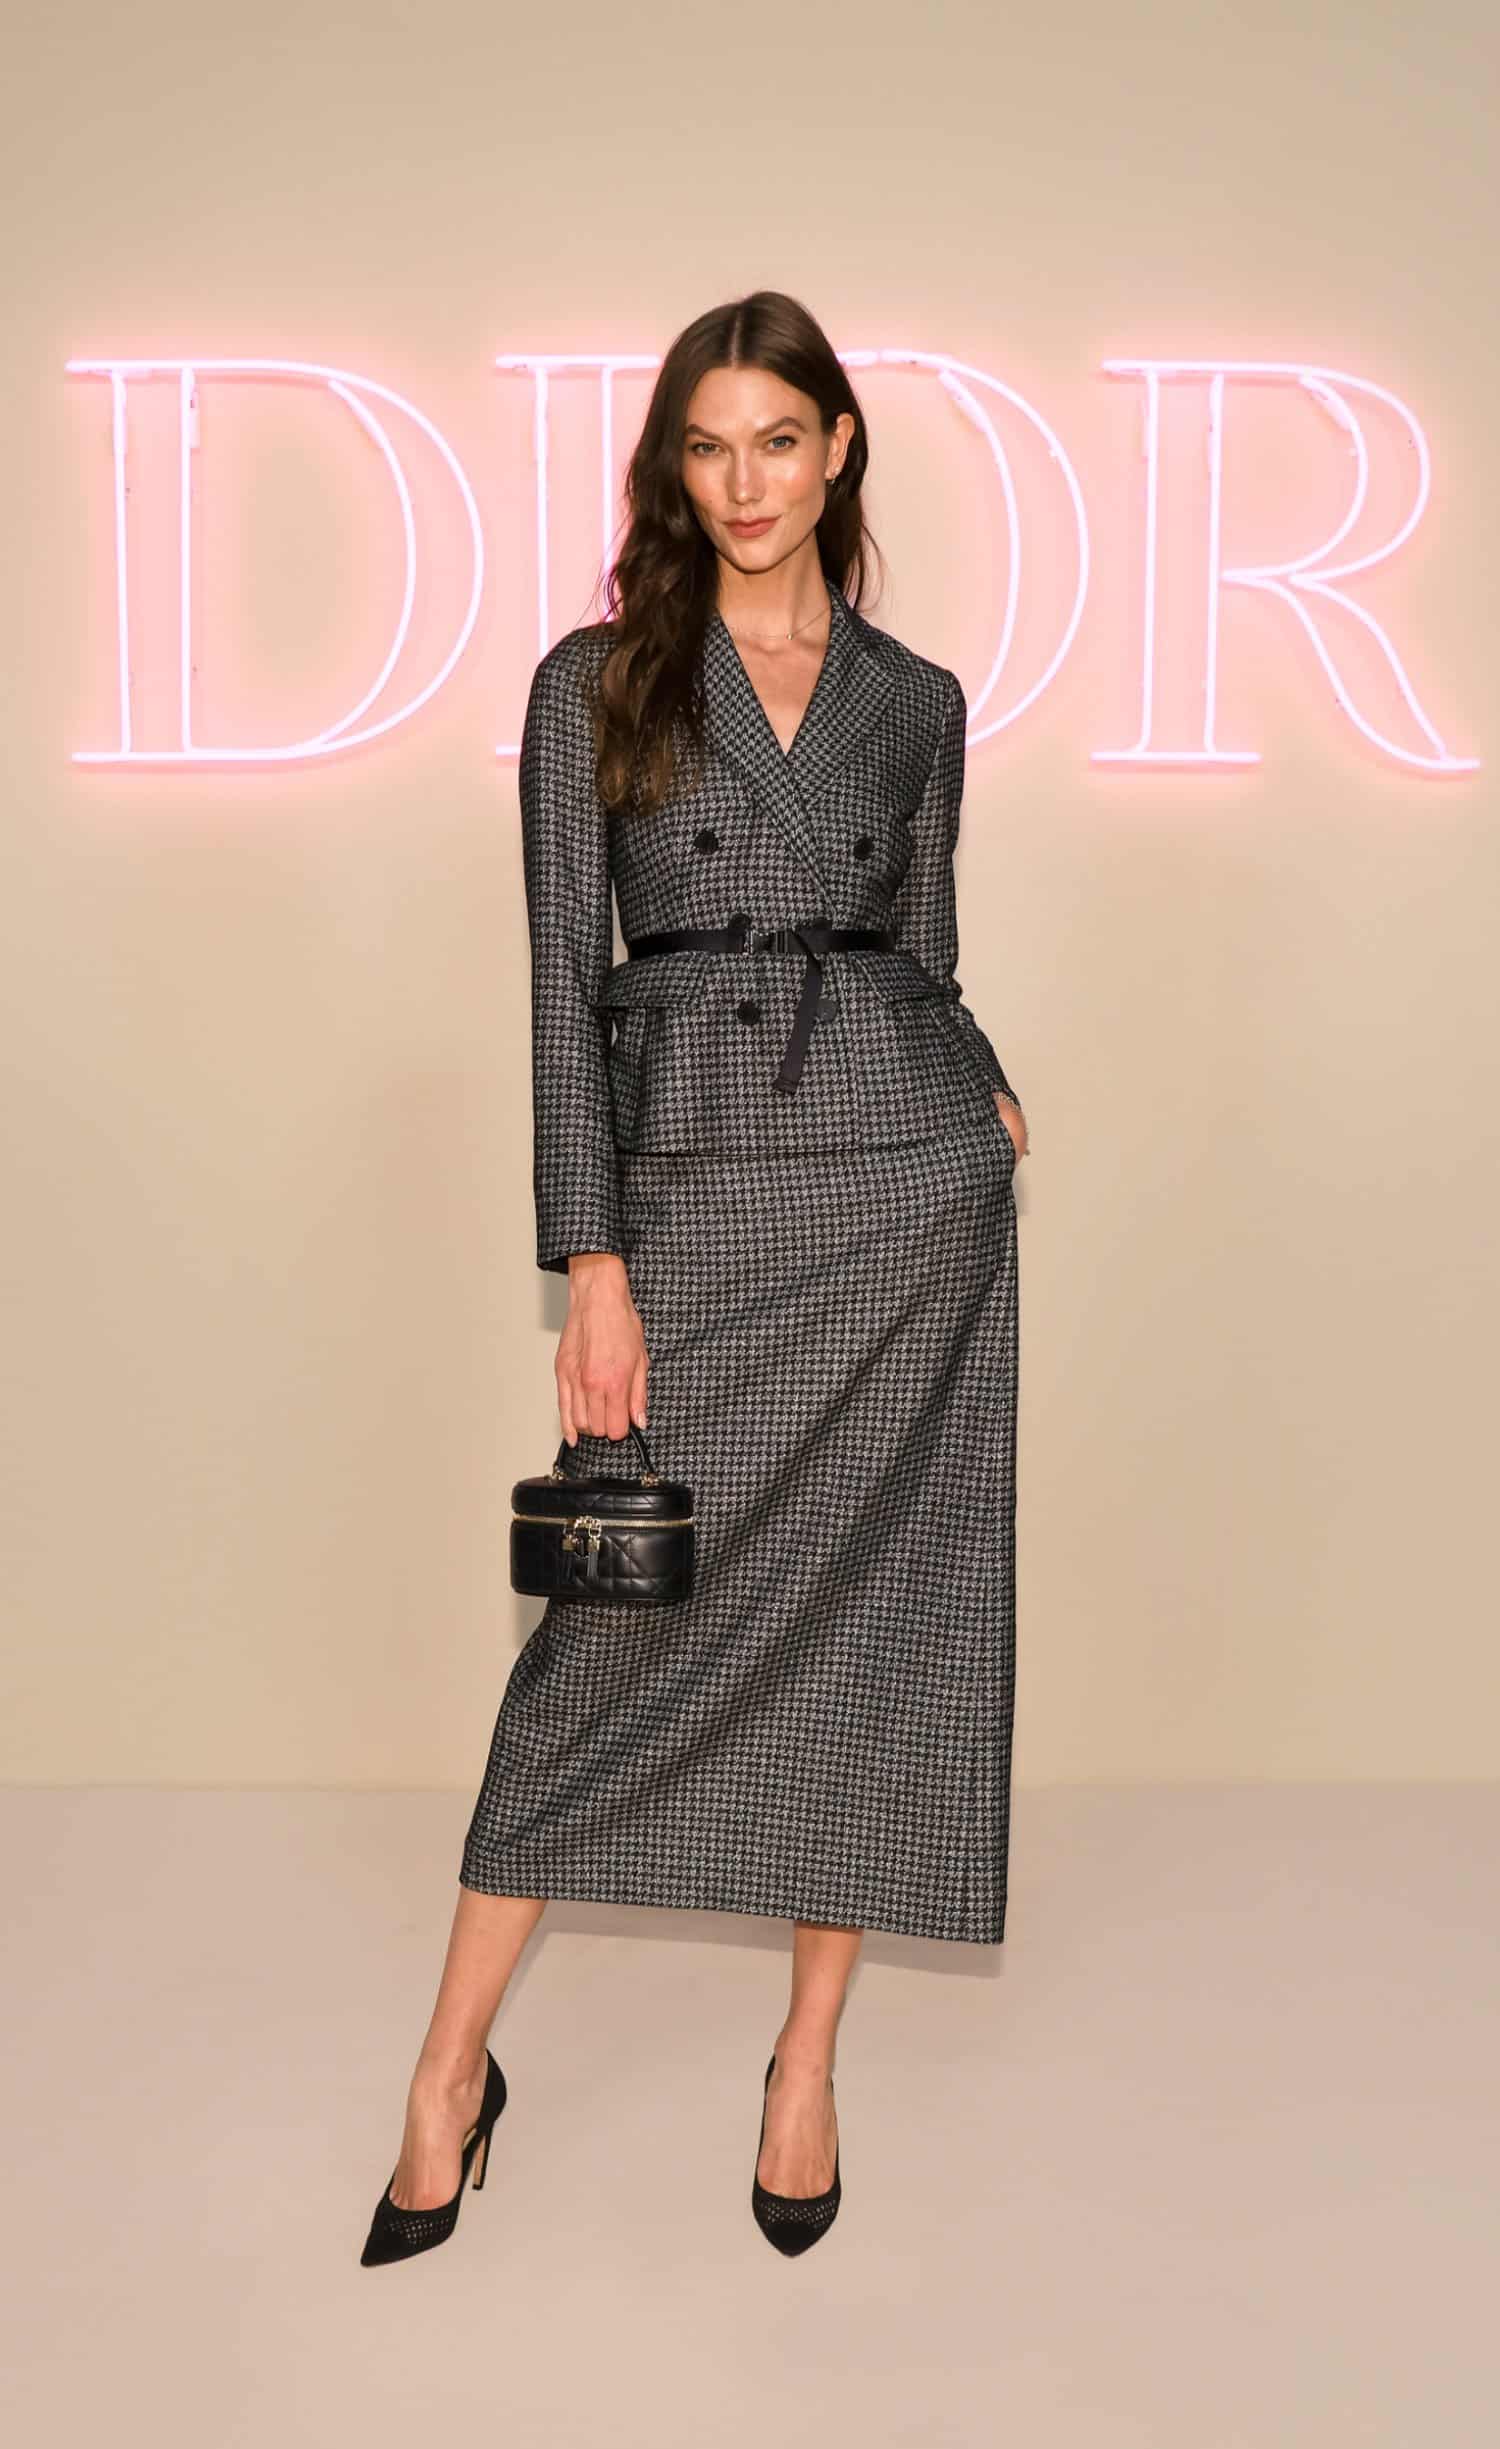 Dior, fashion show, New York City, Karlie Kloss